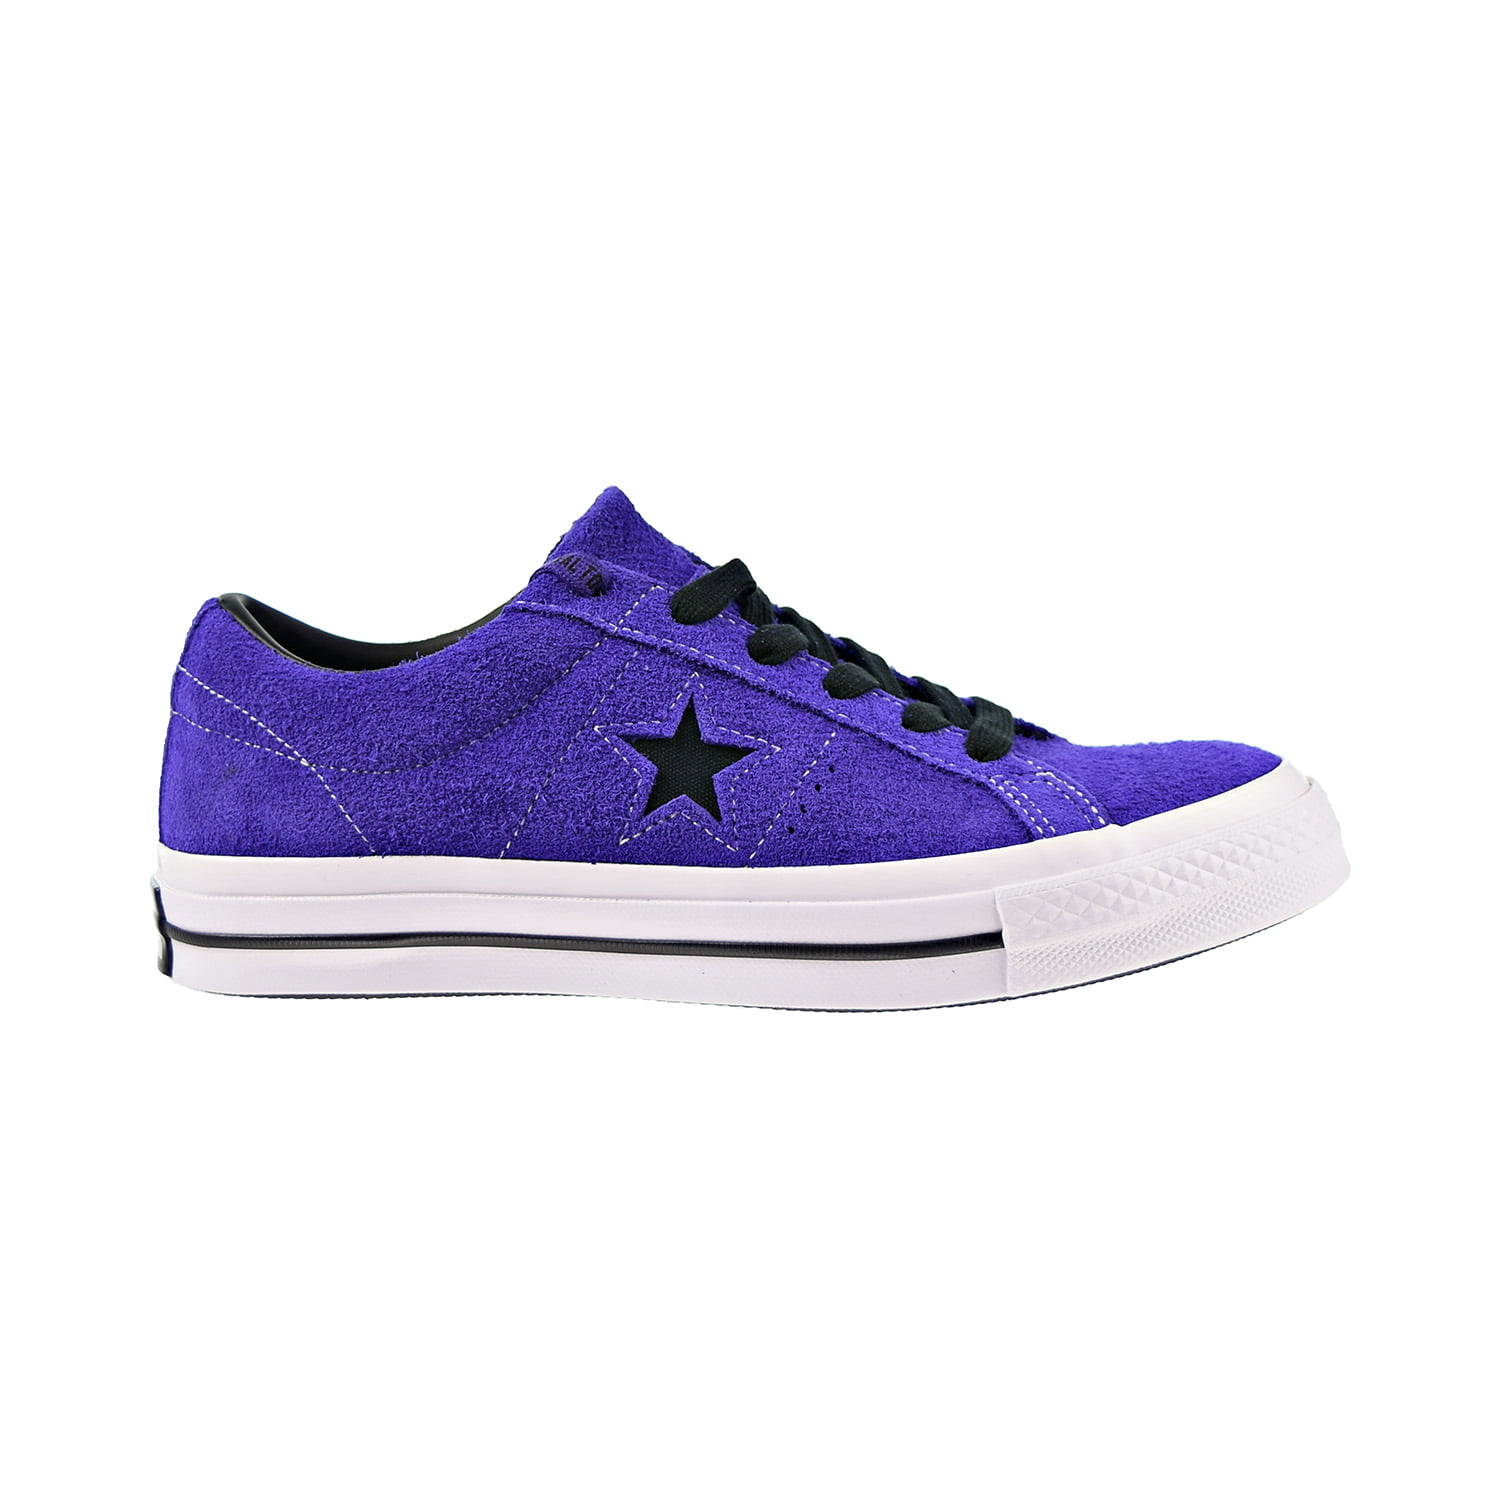 Converse One Star Ox Men's Shoes Court Purple-Black-White 163248c